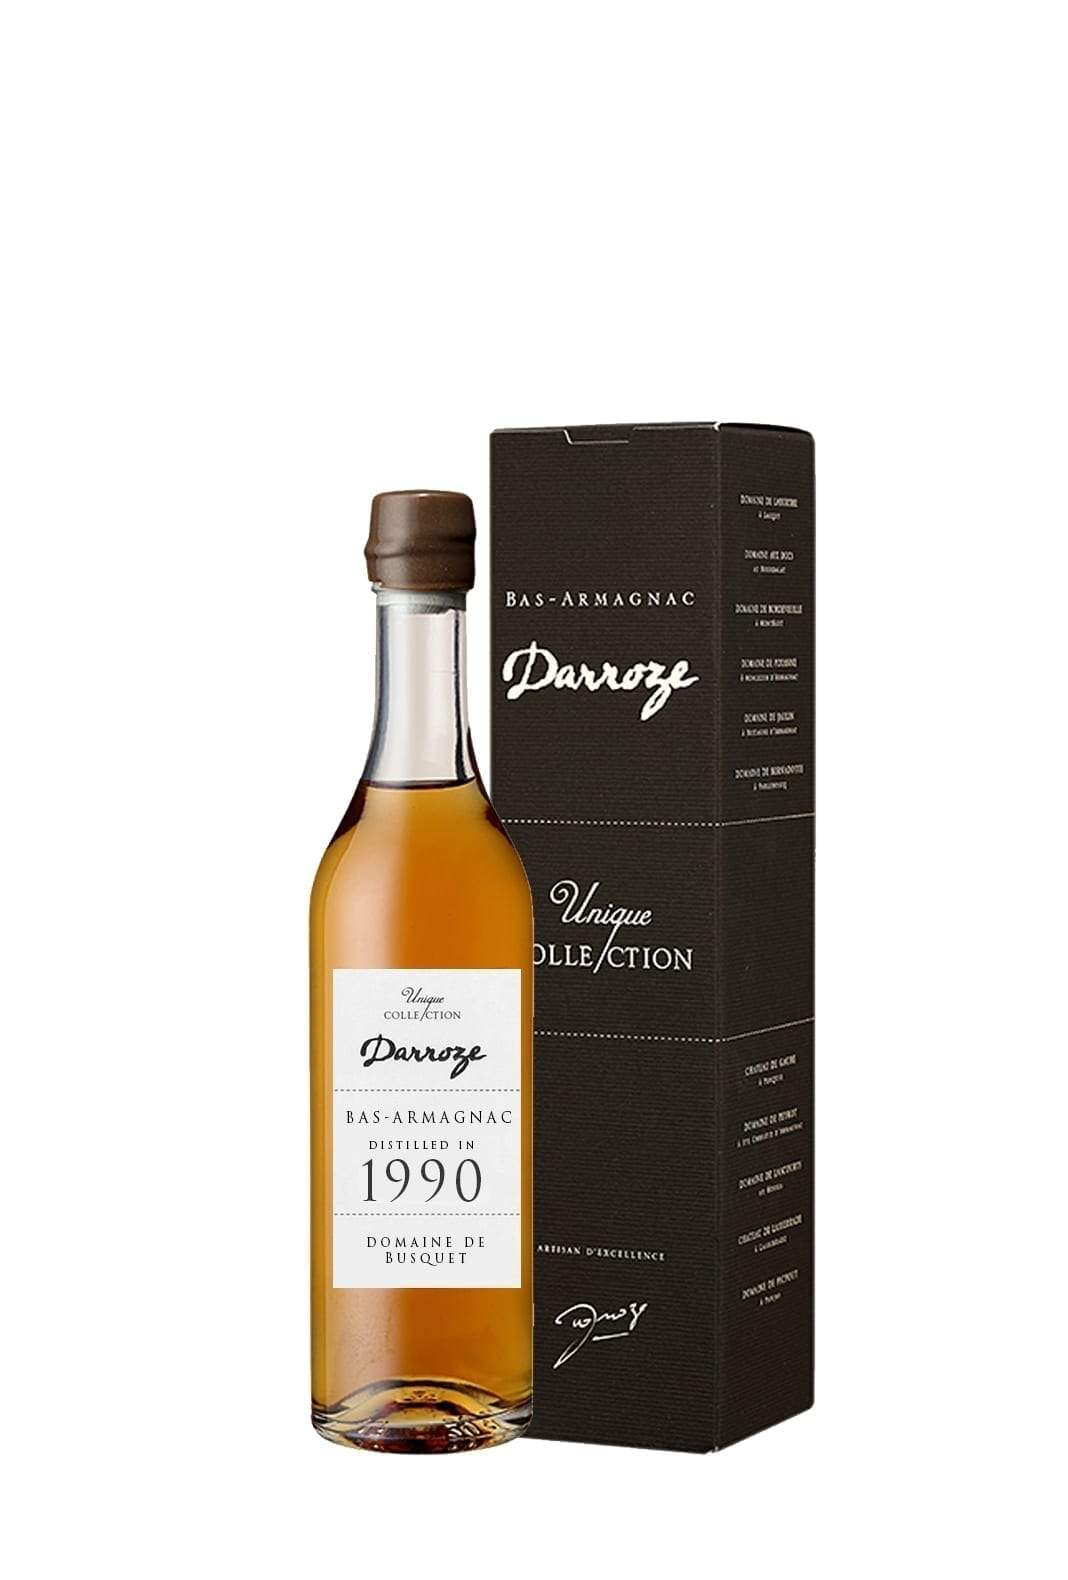 Darroze 1990 Domaine de Busquet Armagnac 49.8% 200ml | Brandy | Shop online at Spirits of France